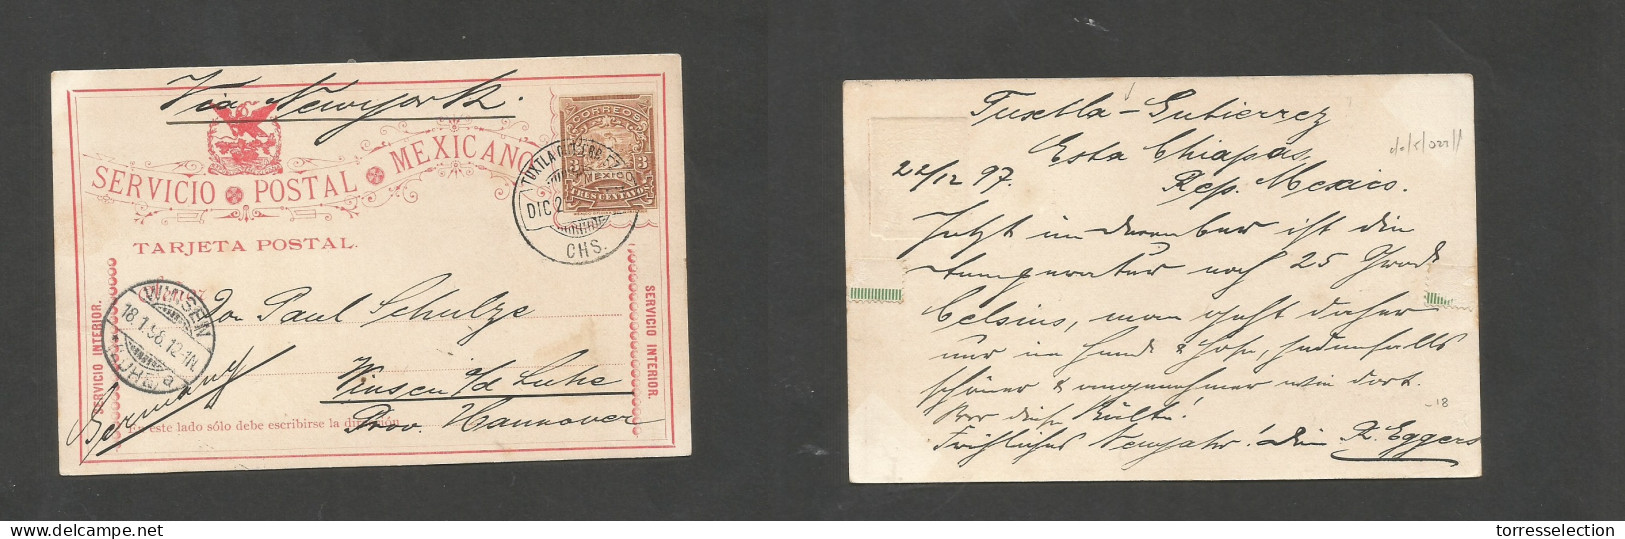 MEXICO - Stationery. 1897 (21 Dec) Tuxla Guerrero - Germany, Winsen (18 Jan 98) 3c Brown Militar Issue Stat Card. SPM. F - Mexique